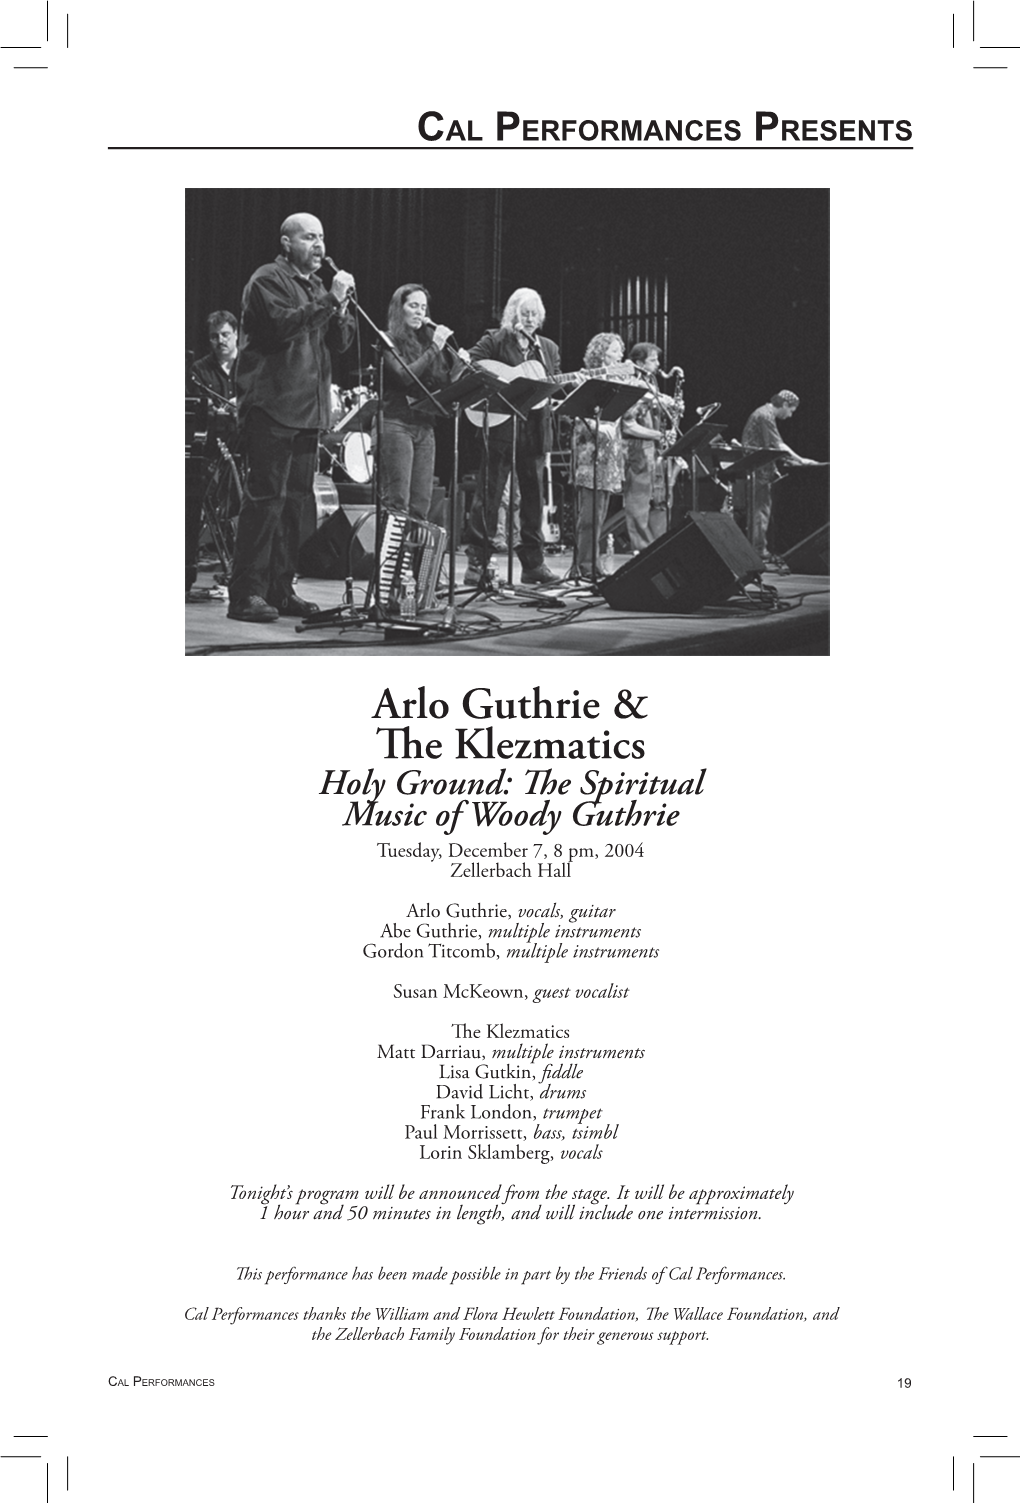 Arlo Guthrie & the Klezmatics